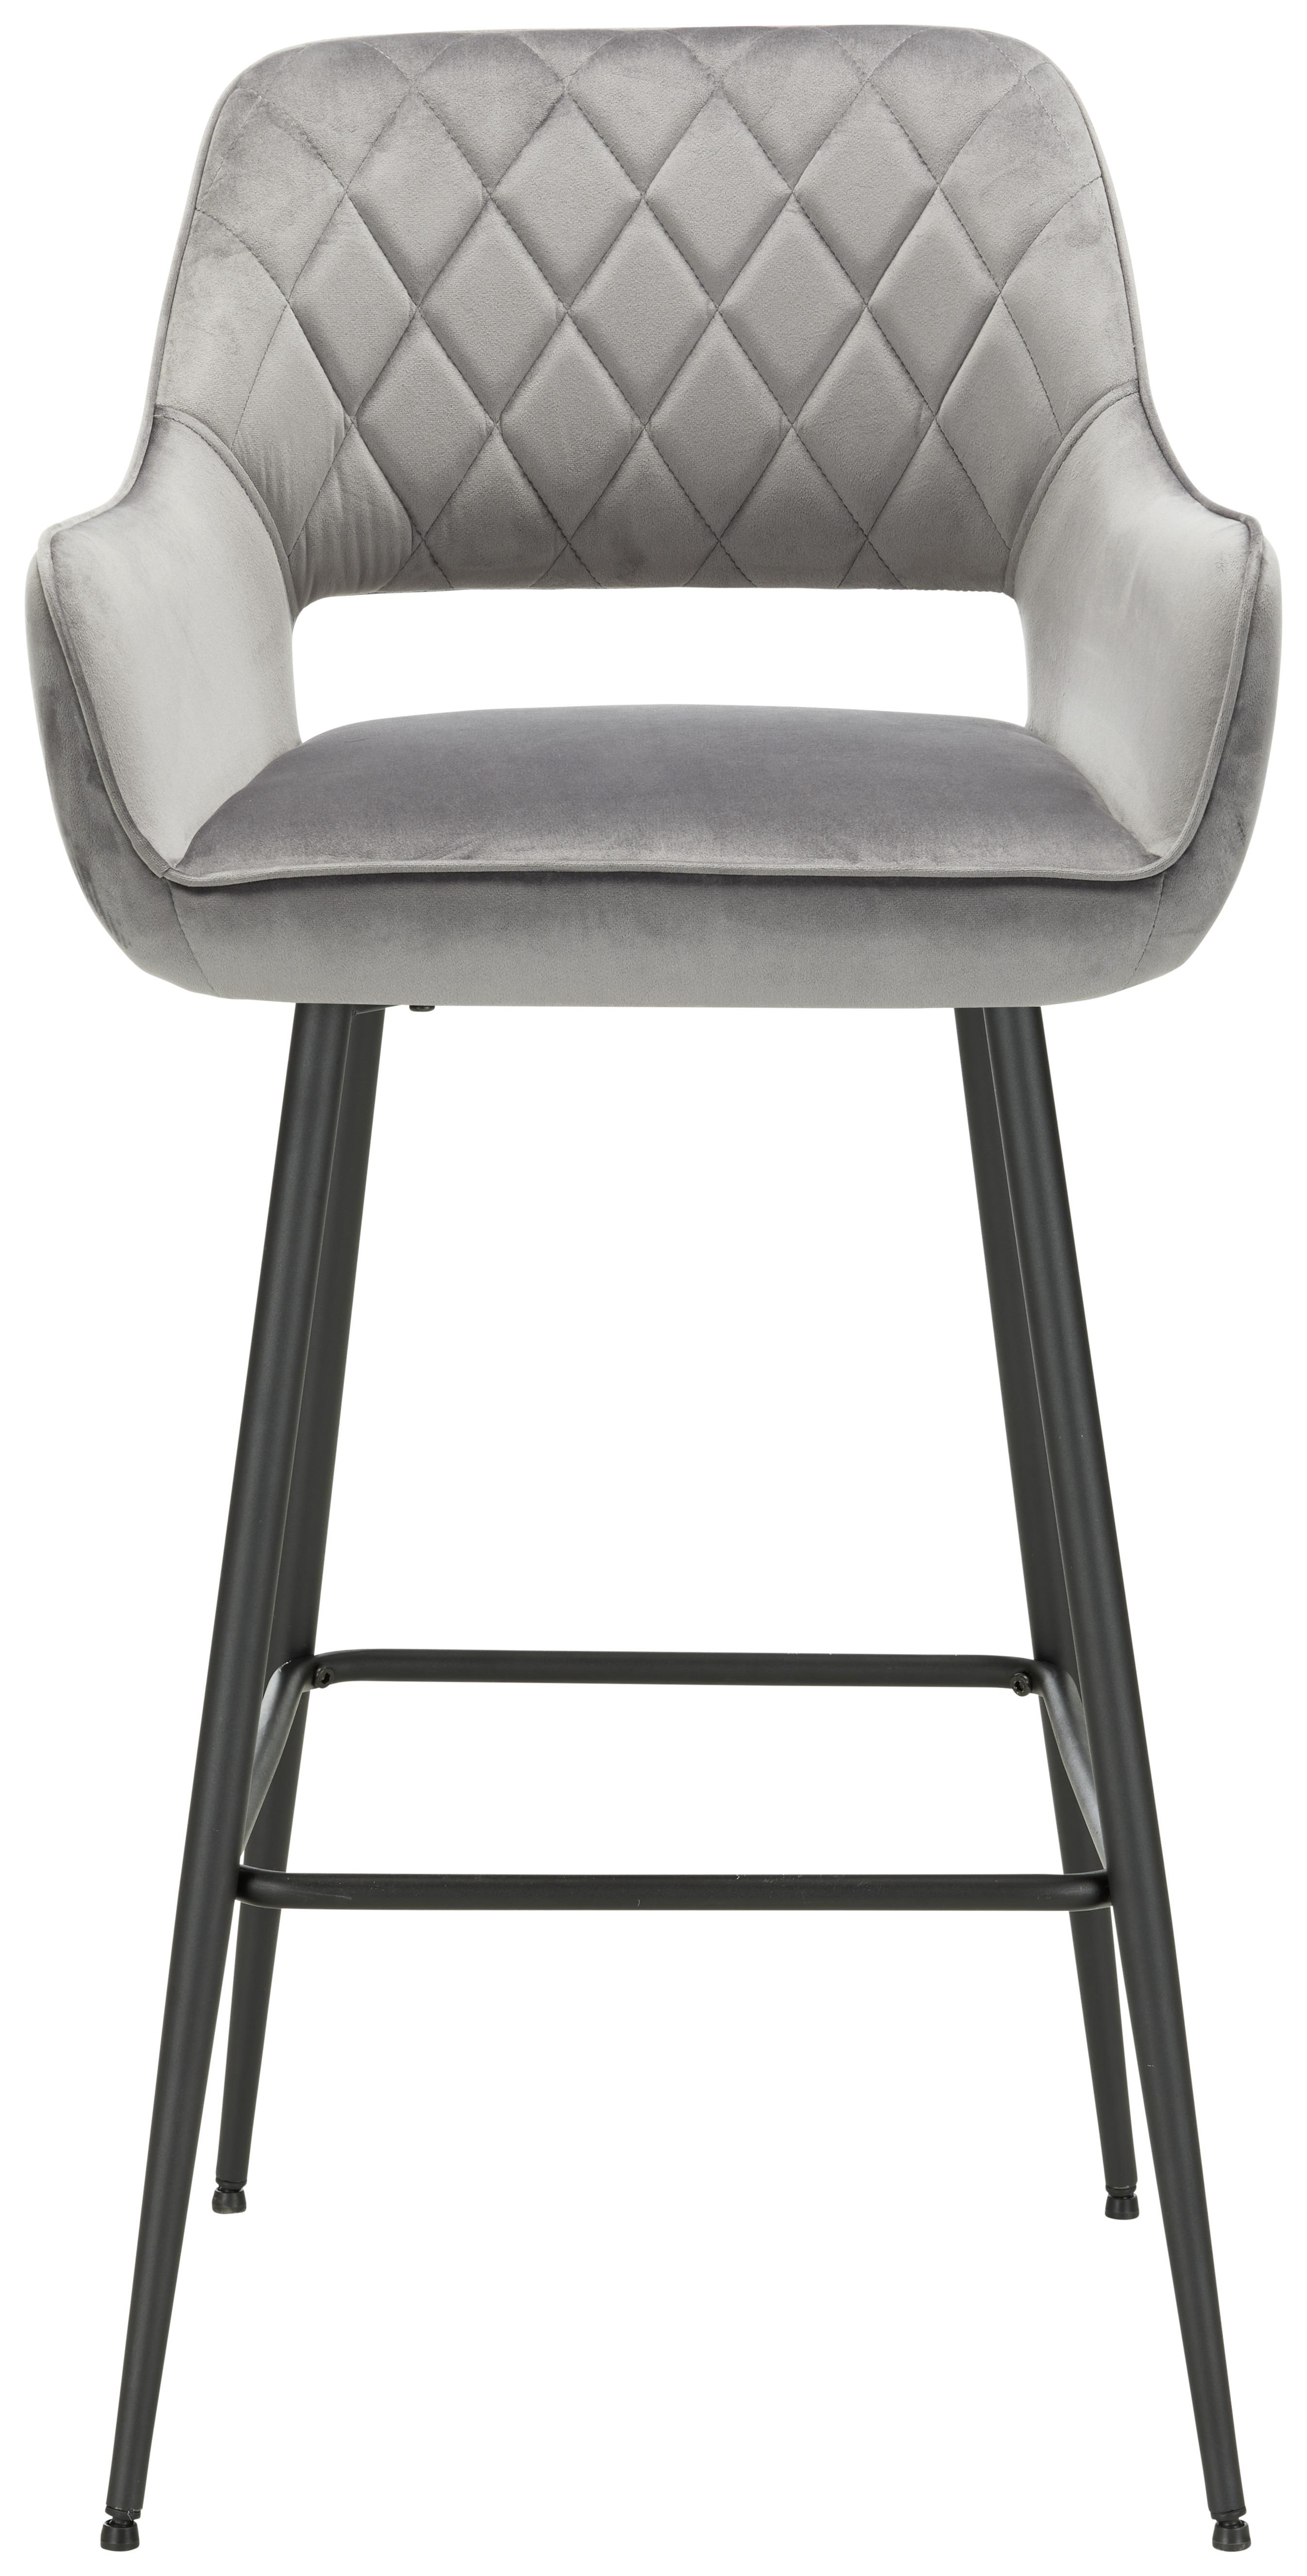 Barová Židle Serafina - šedá/černá, Moderní, kov/textil (54/105/60cm) - Modern Living